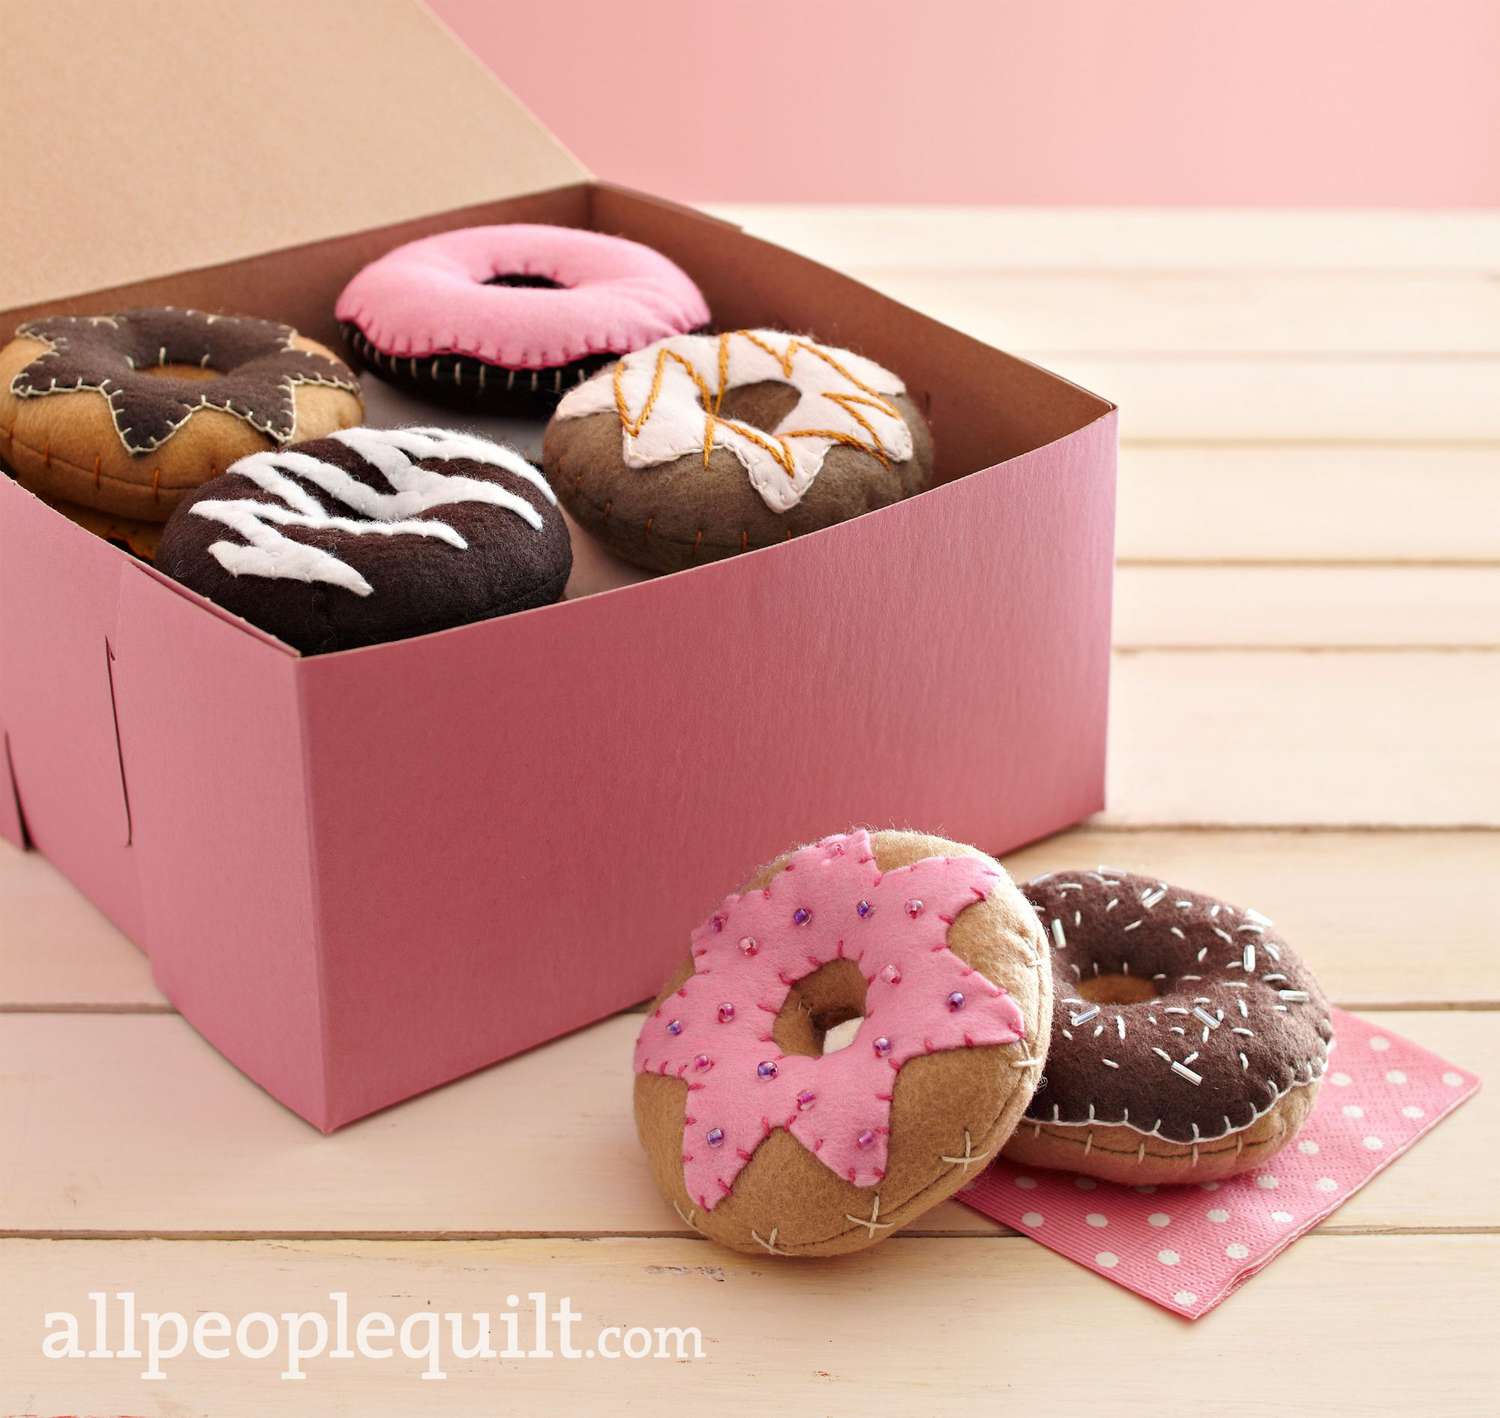 Felt donut pincushions in bakery box